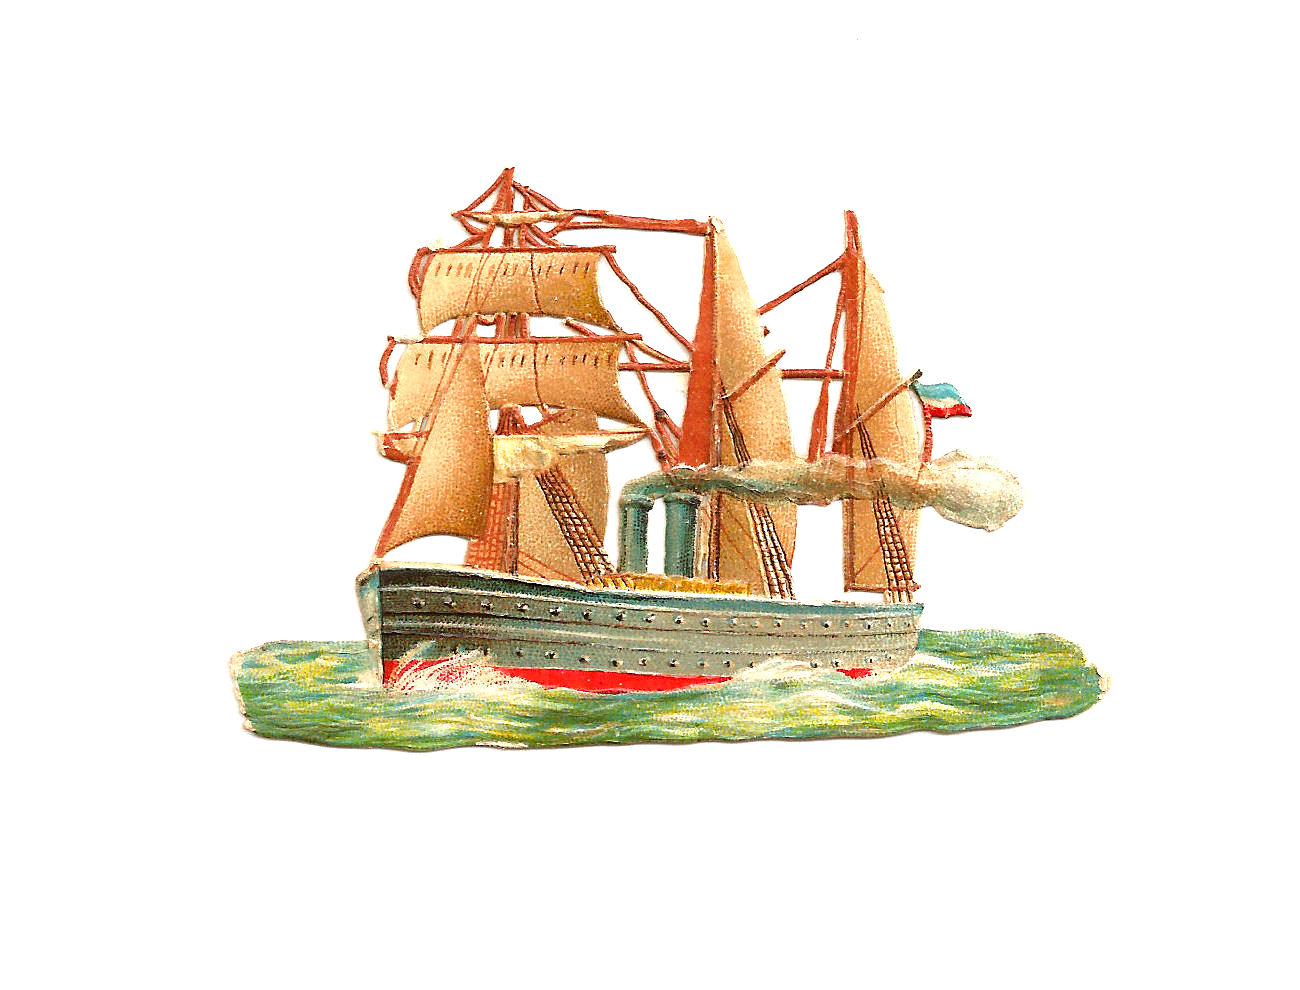 Antique Images: Free Vintage Ship Graphic: Old Steam Ship Illustration